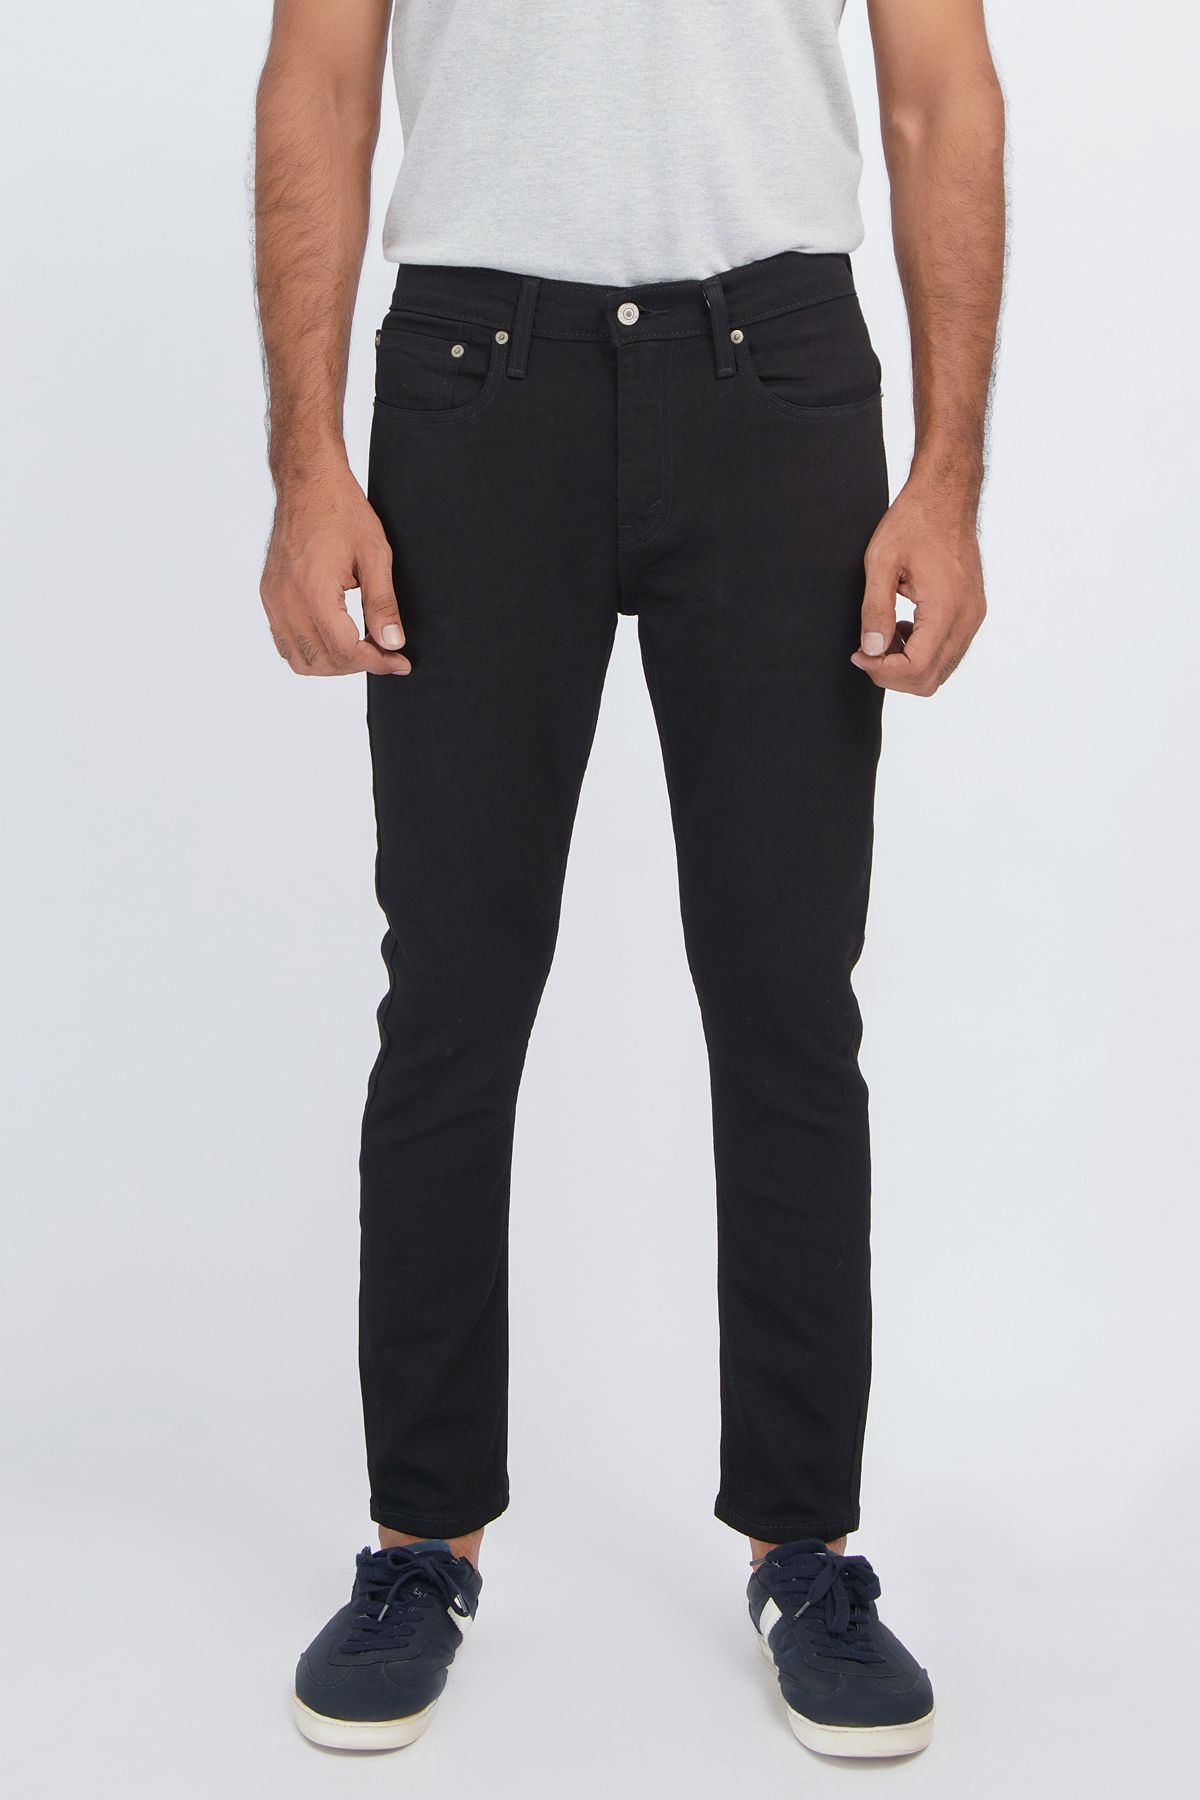 Levi's Â® 512 Slim Taper Black Stretch Black Men Jeans|